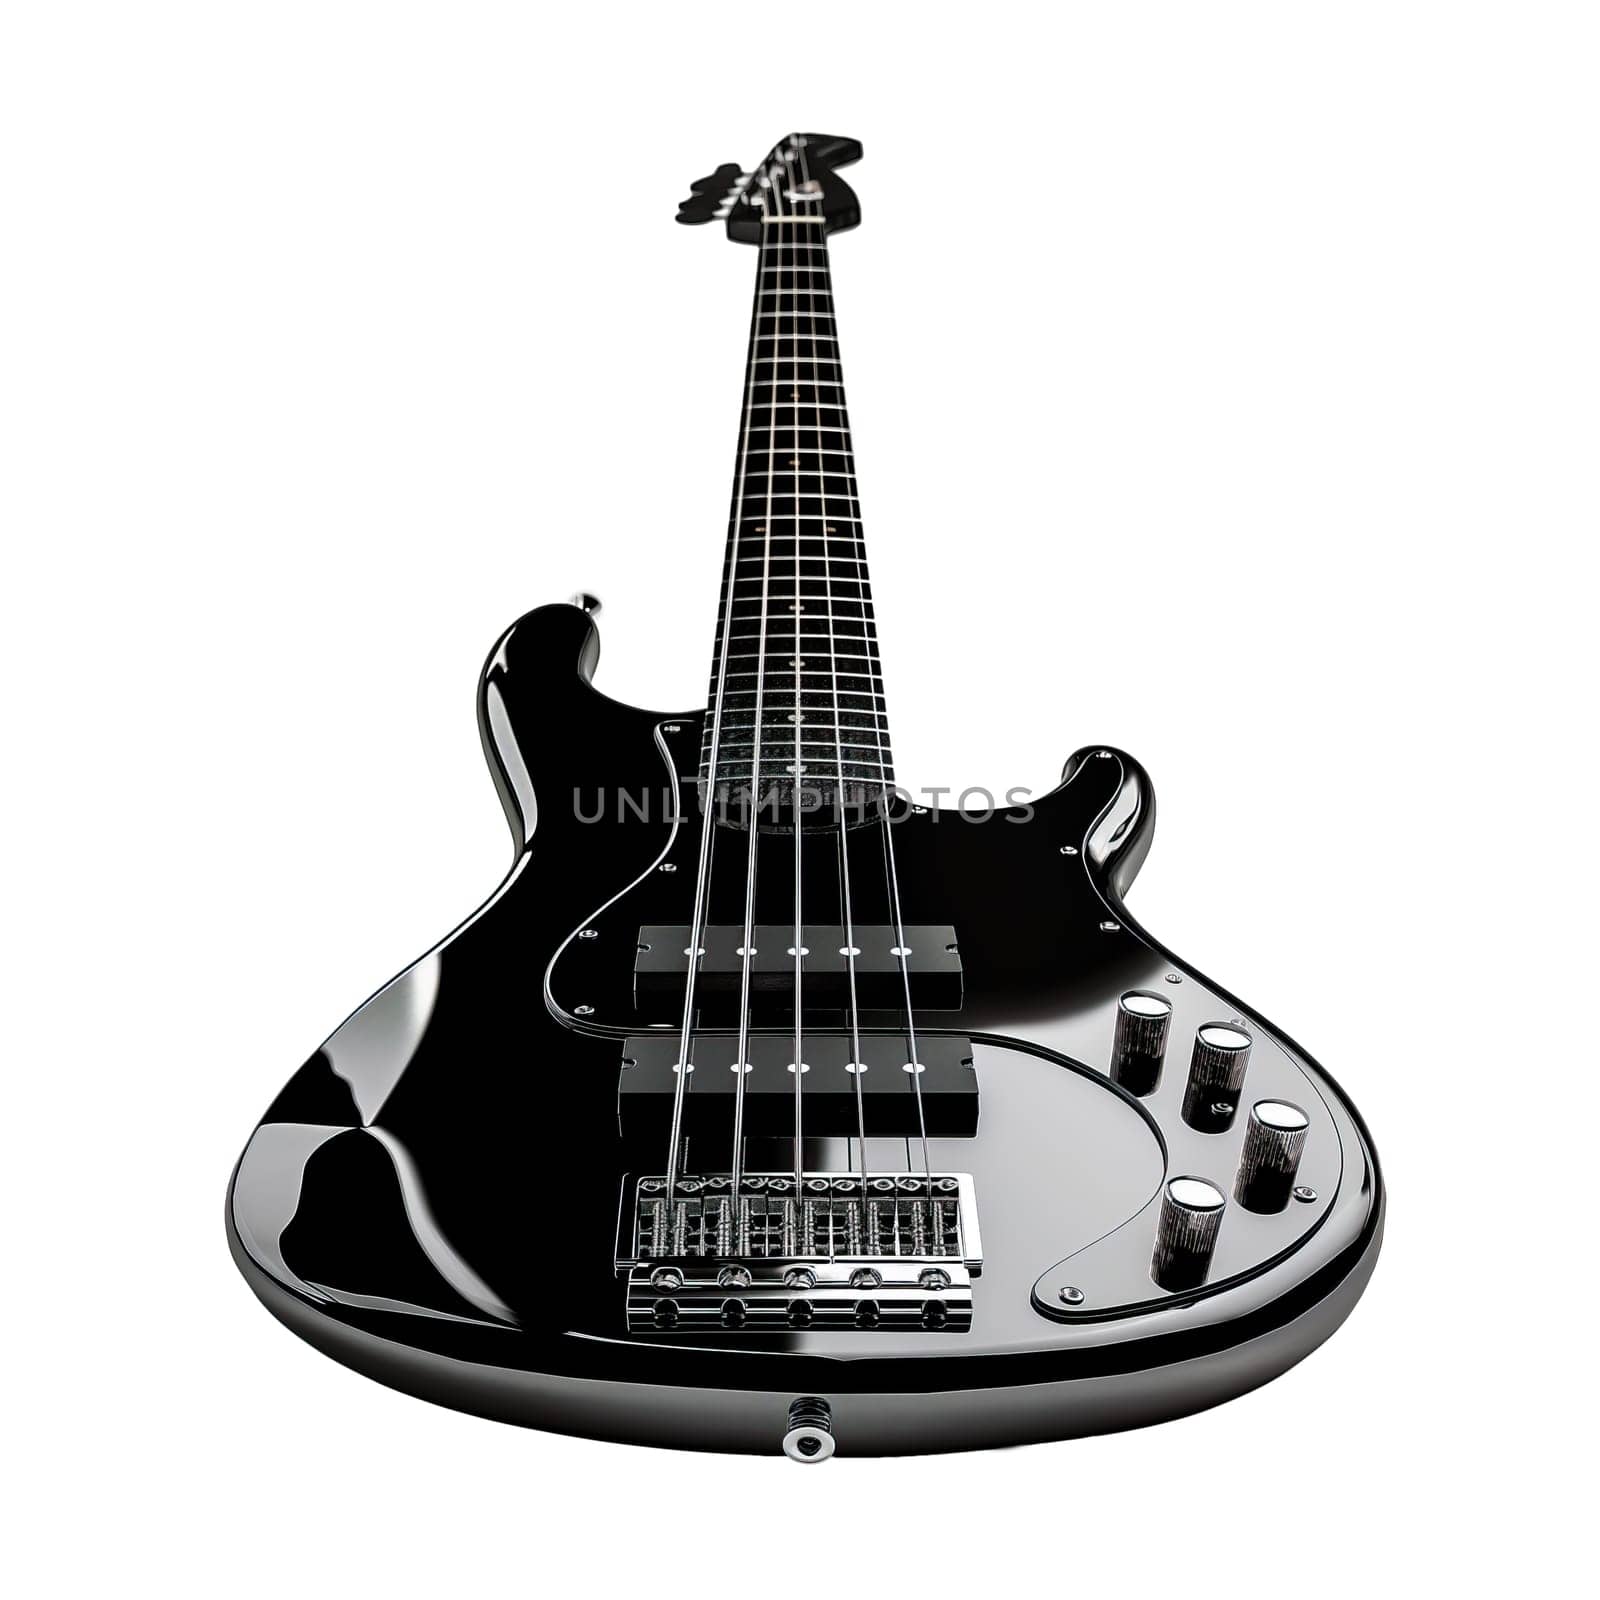 Black bass guitar musical instrument by Dustick